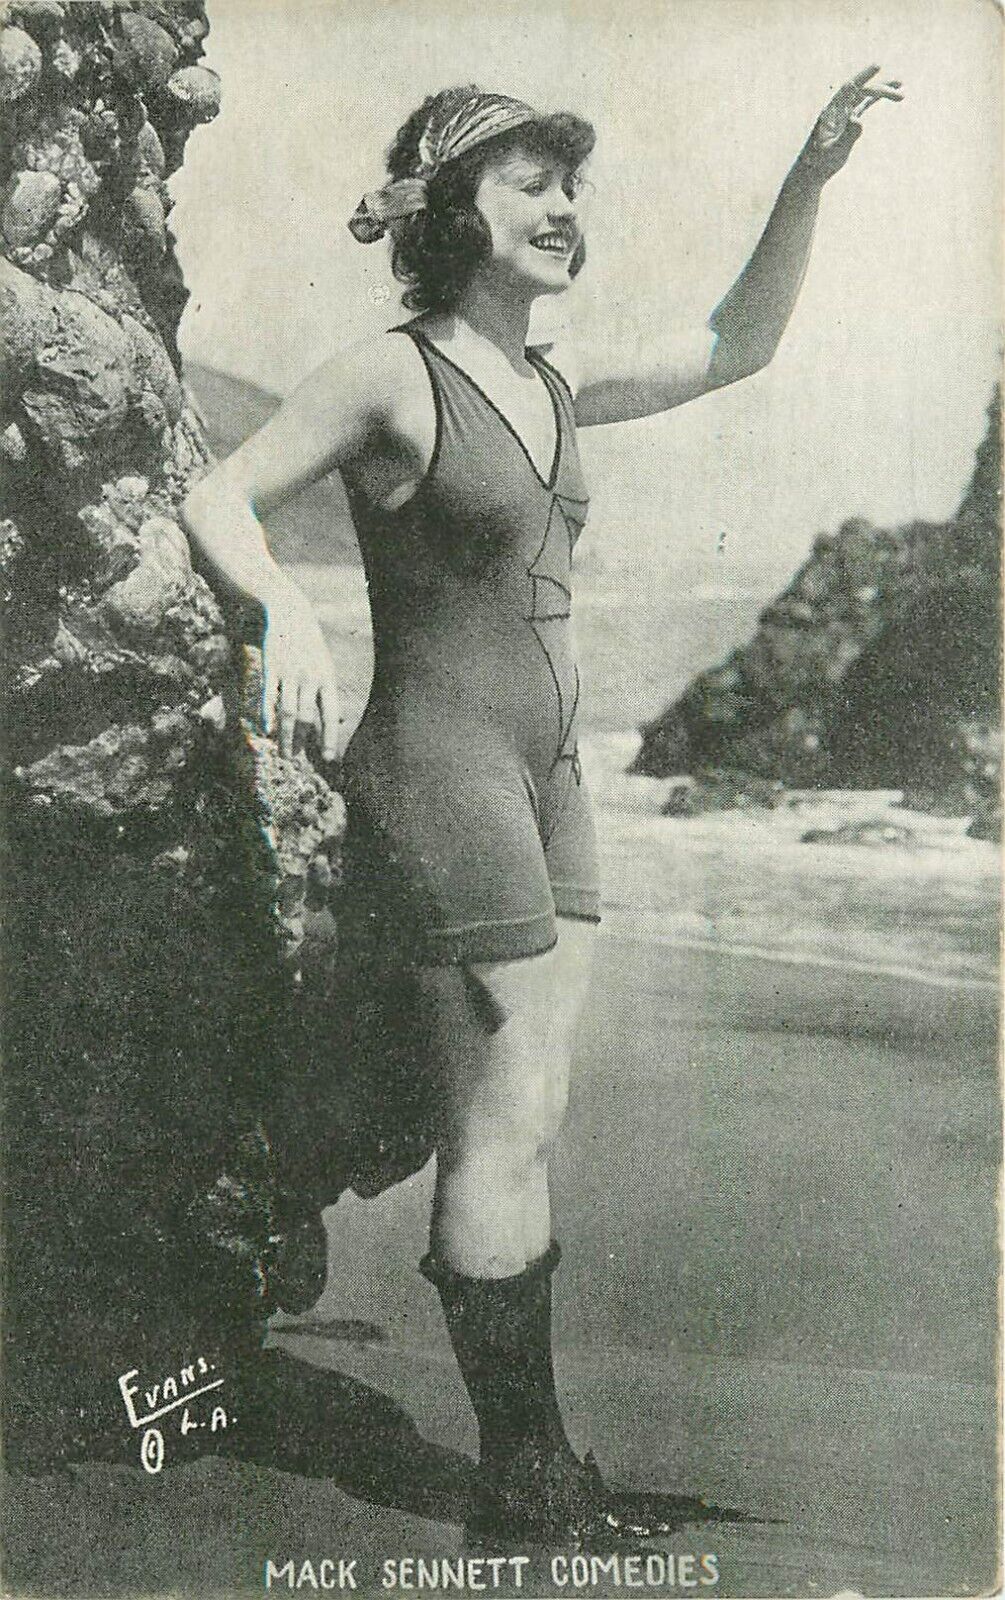 Mack Sennett Comedies Bathing Beauty Pretty Girl in Revealing Bathing Suit~Evans